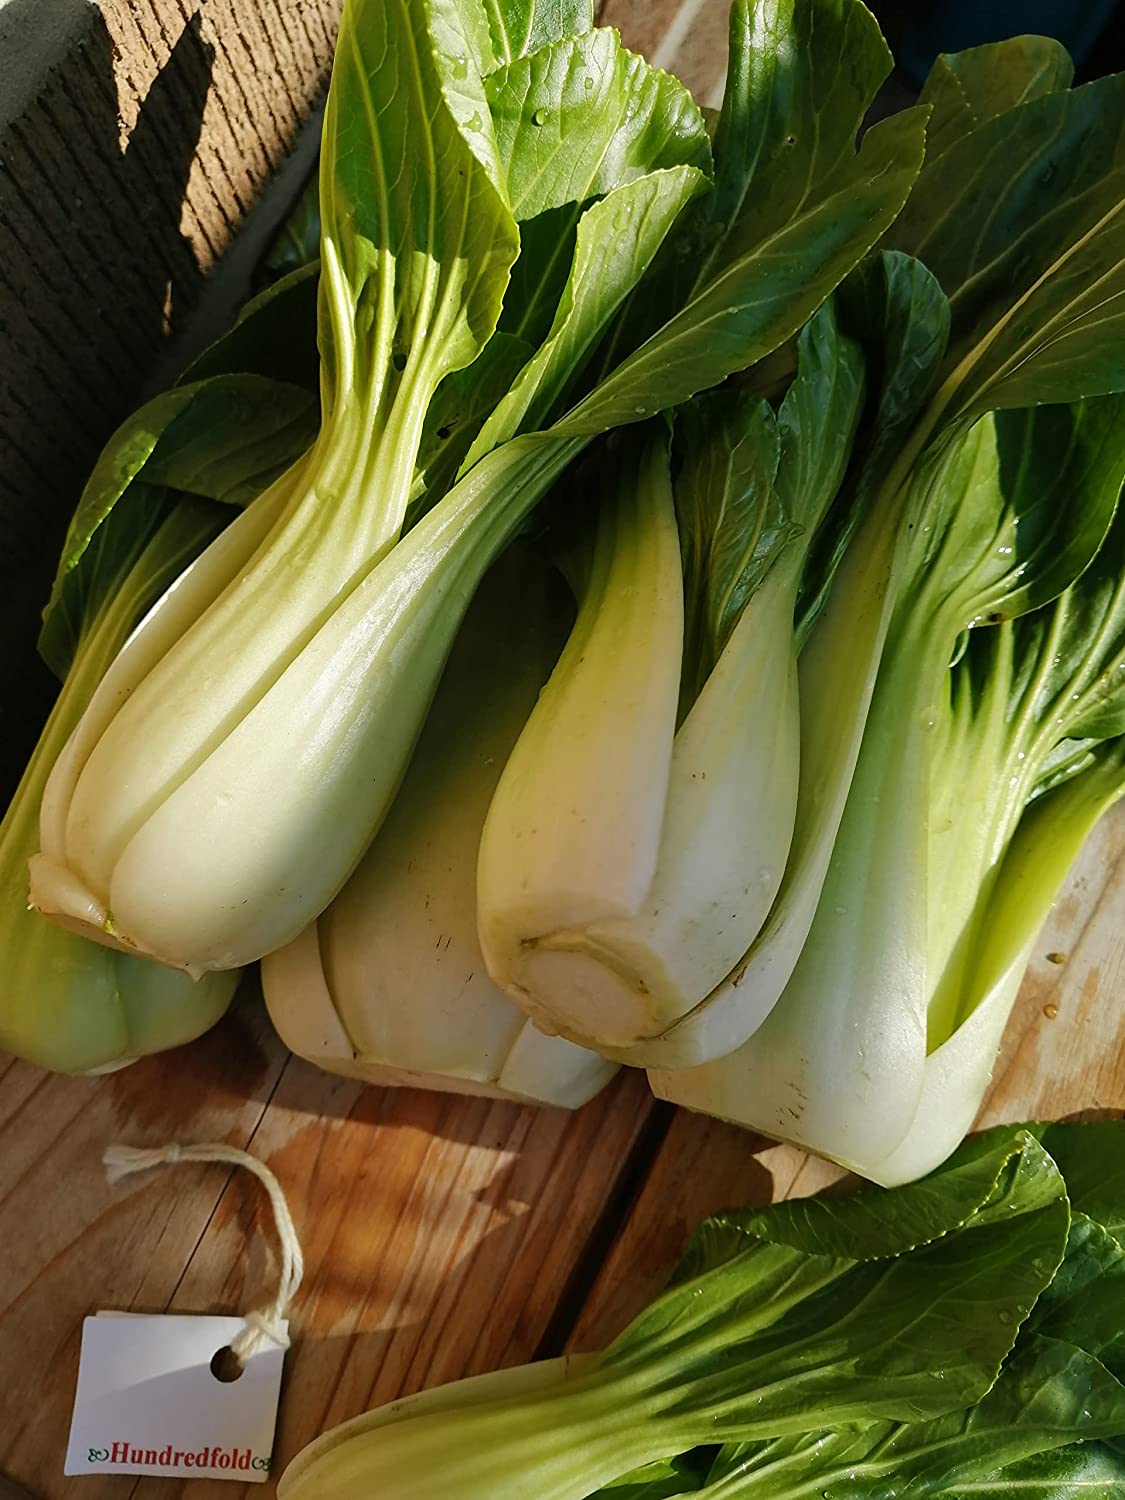 Hundredfold Pak Choi 100 Vegetable Seeds - Brassica rapa F1 Hybrid Asian Greens Chinese Cabbage, Shanghai Green